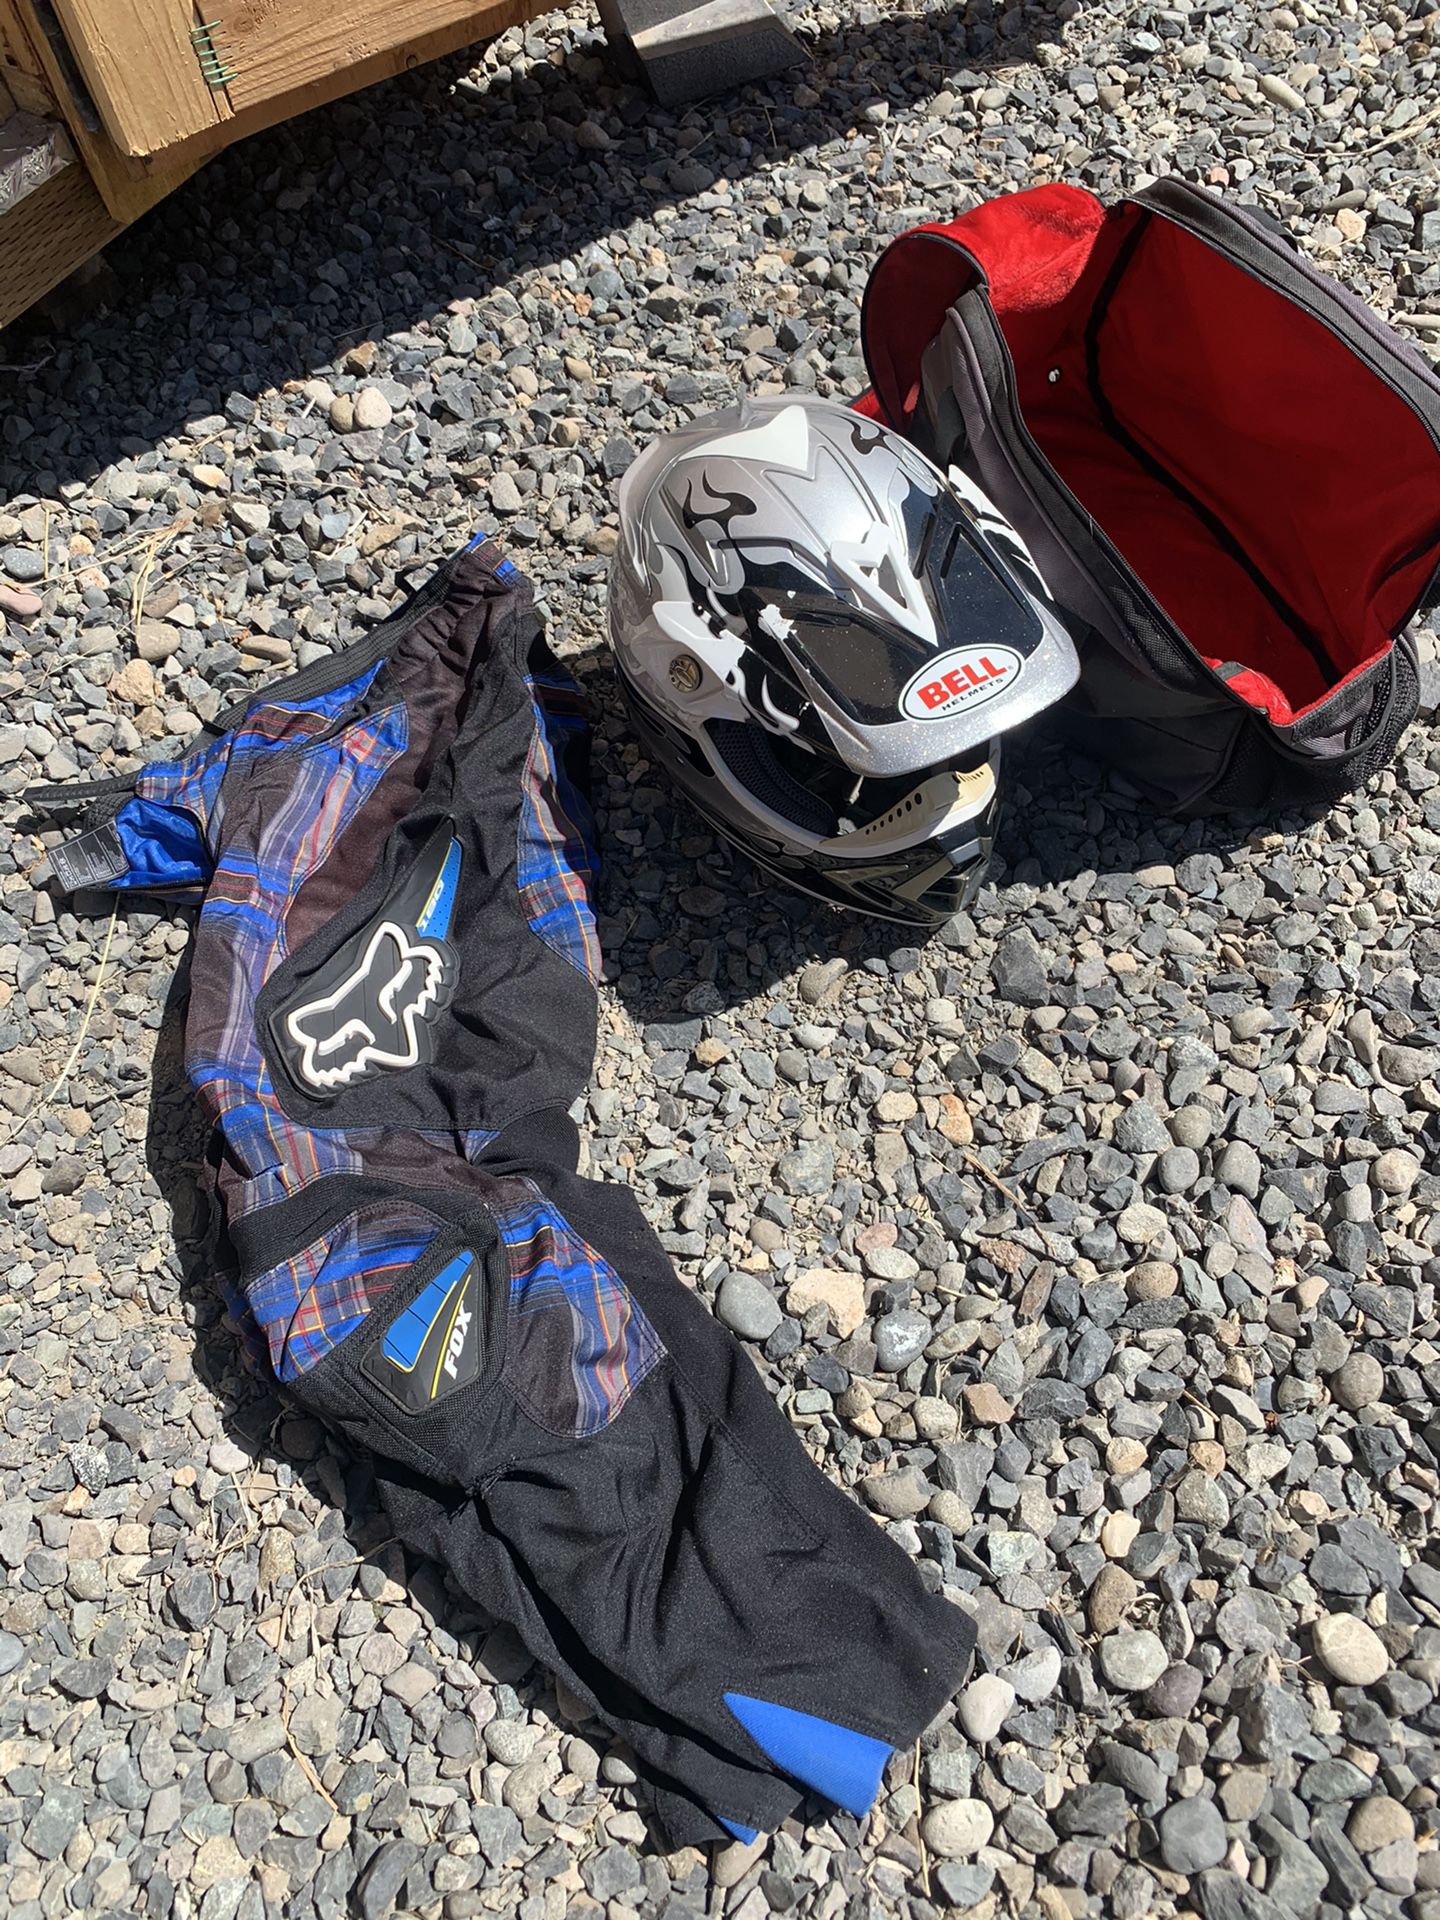 Bell Moto 8 Helmet, Helmet Bag, Fox Racing Pants